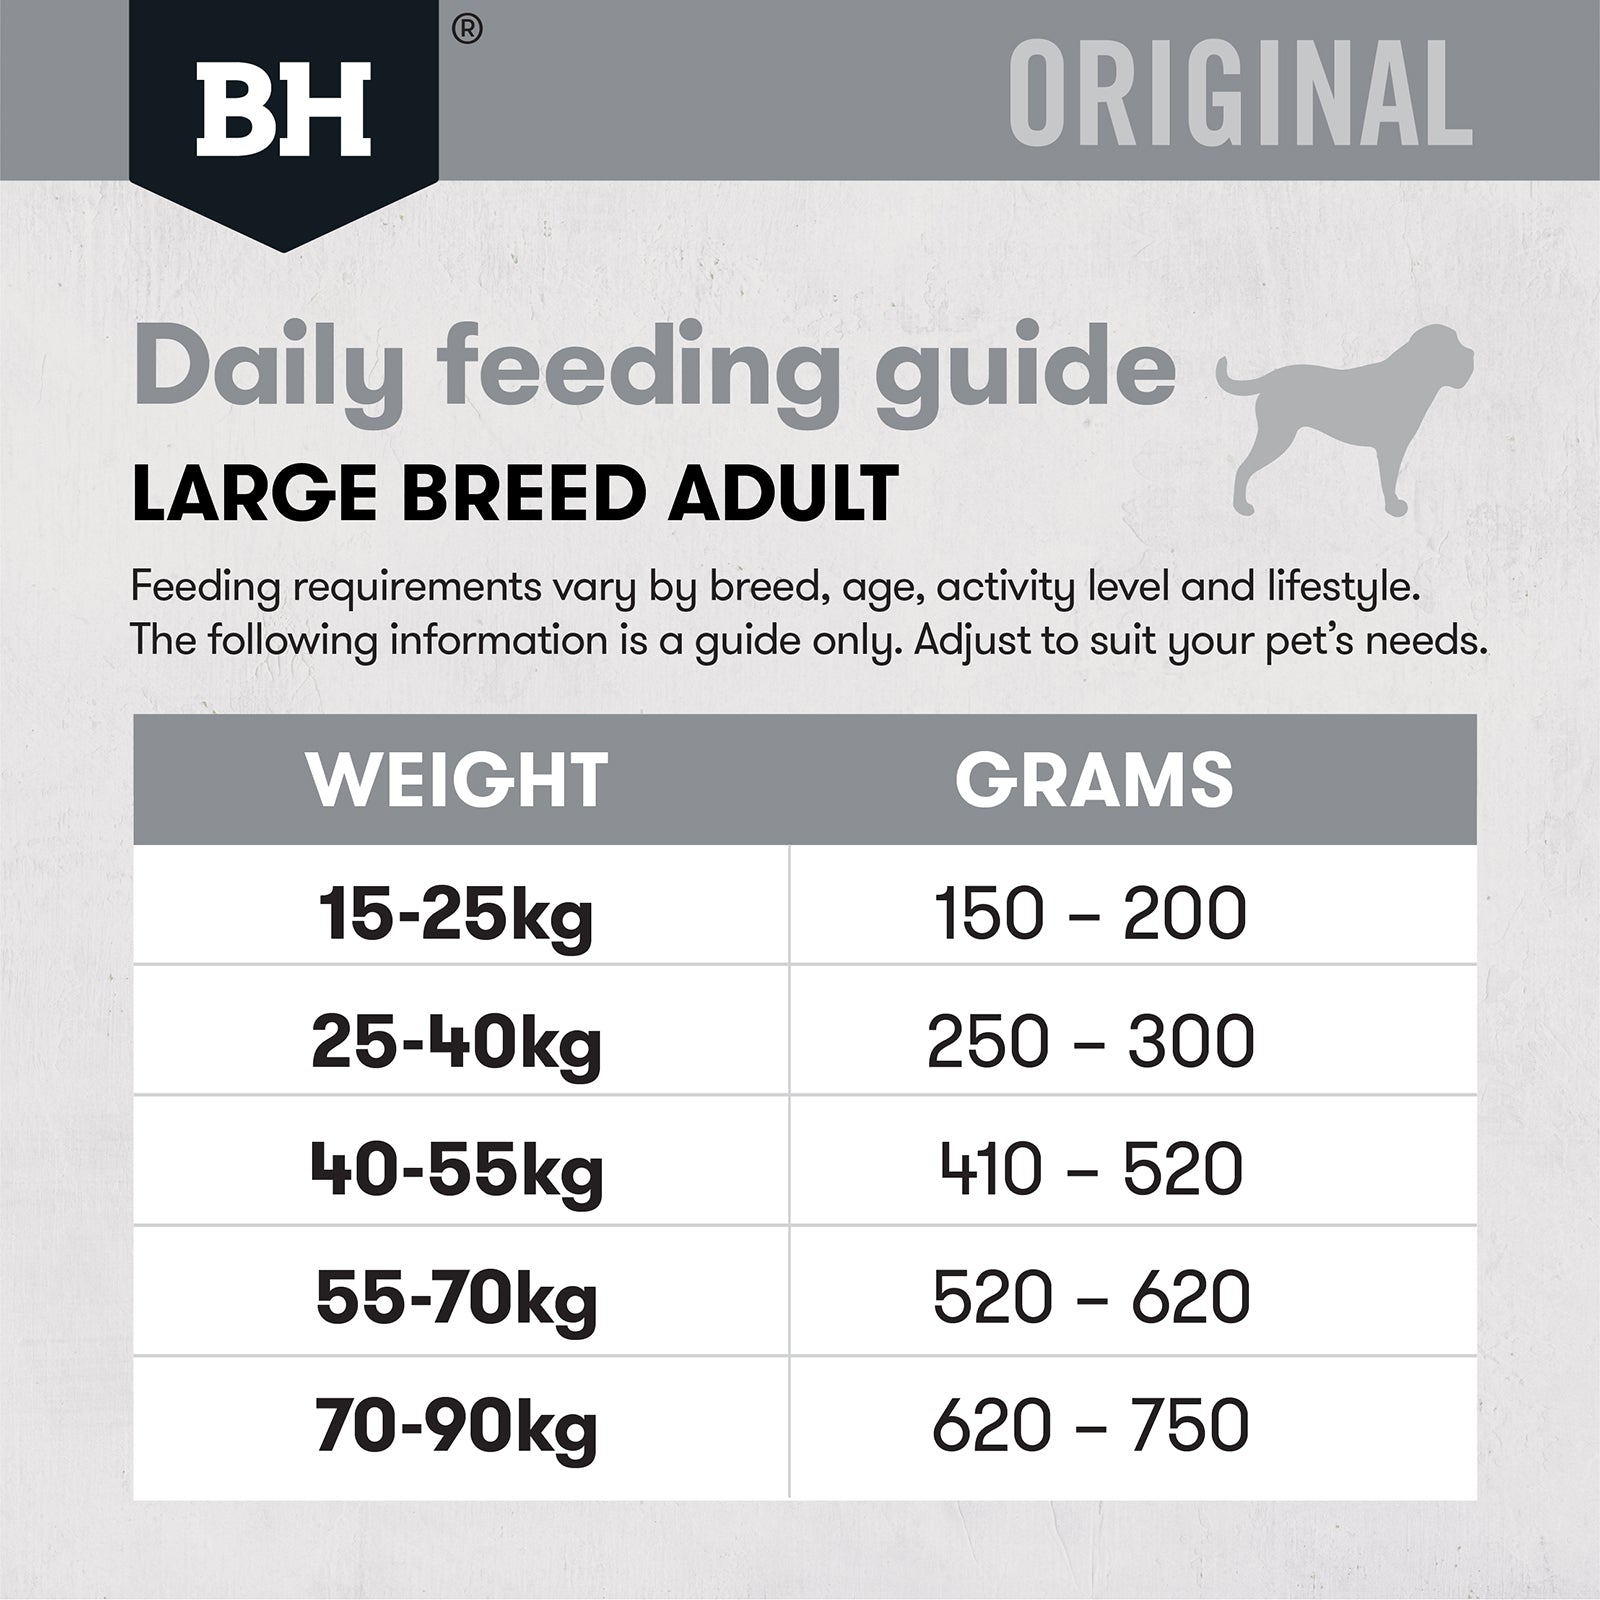 Black Hawk Dog Food Adult Large Breed Chicken & Rice